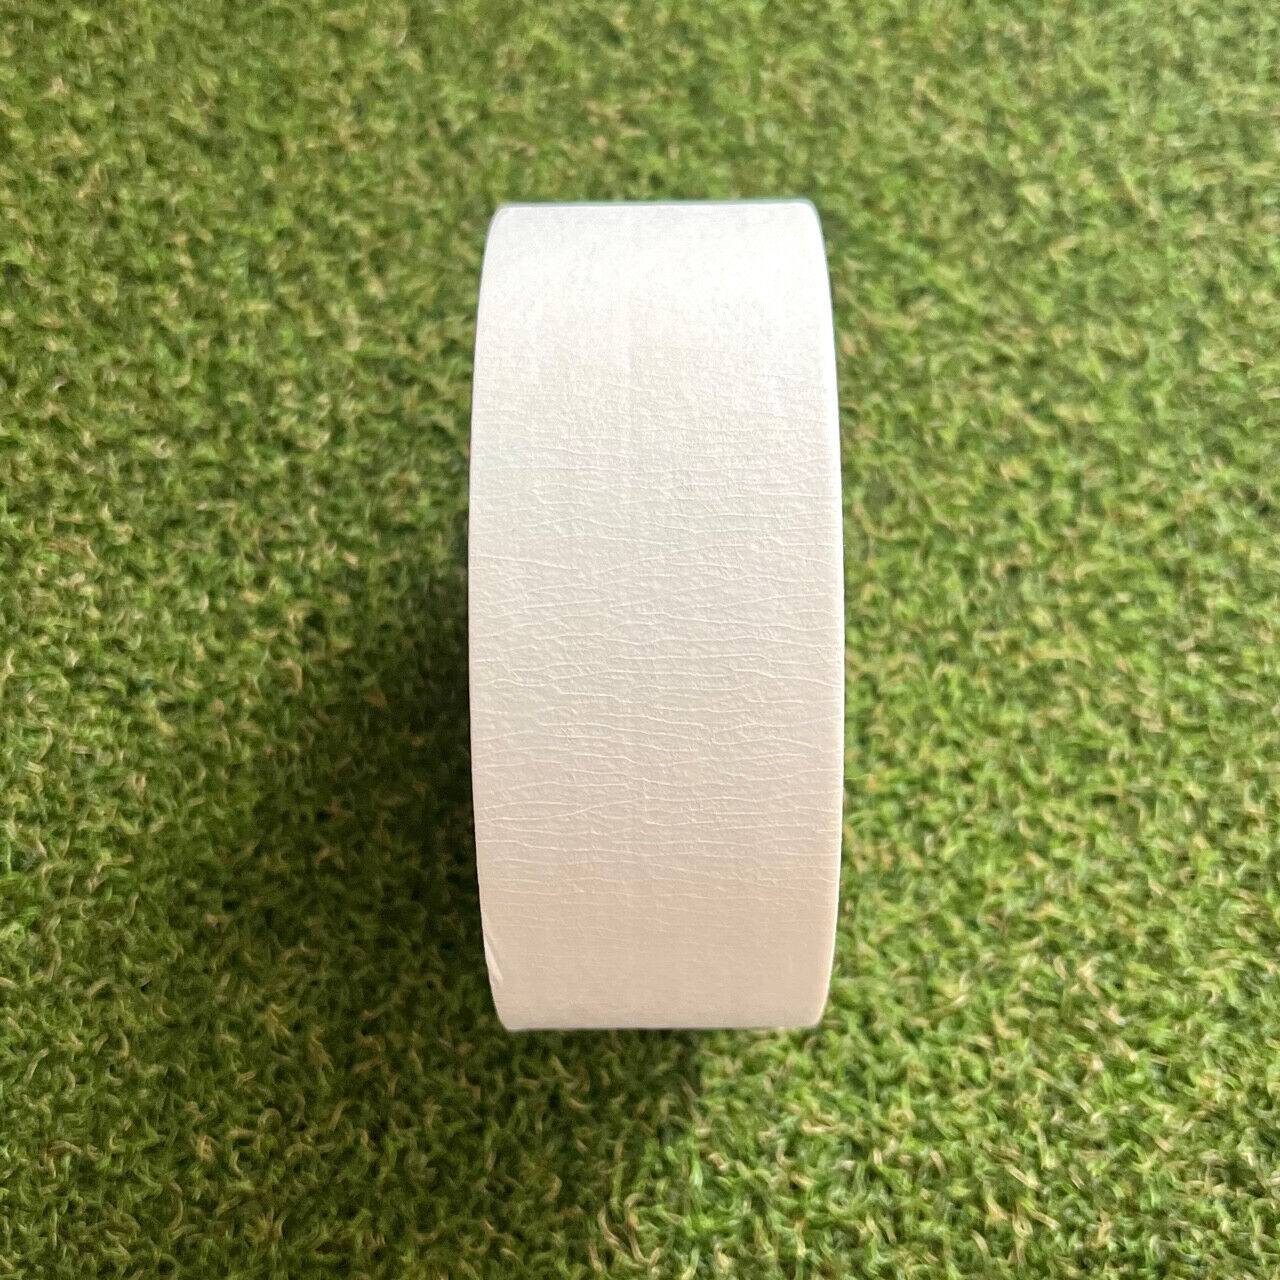 NEW Brampton Double-Sided Golf Grip Tape - 2" x 36yd Roll